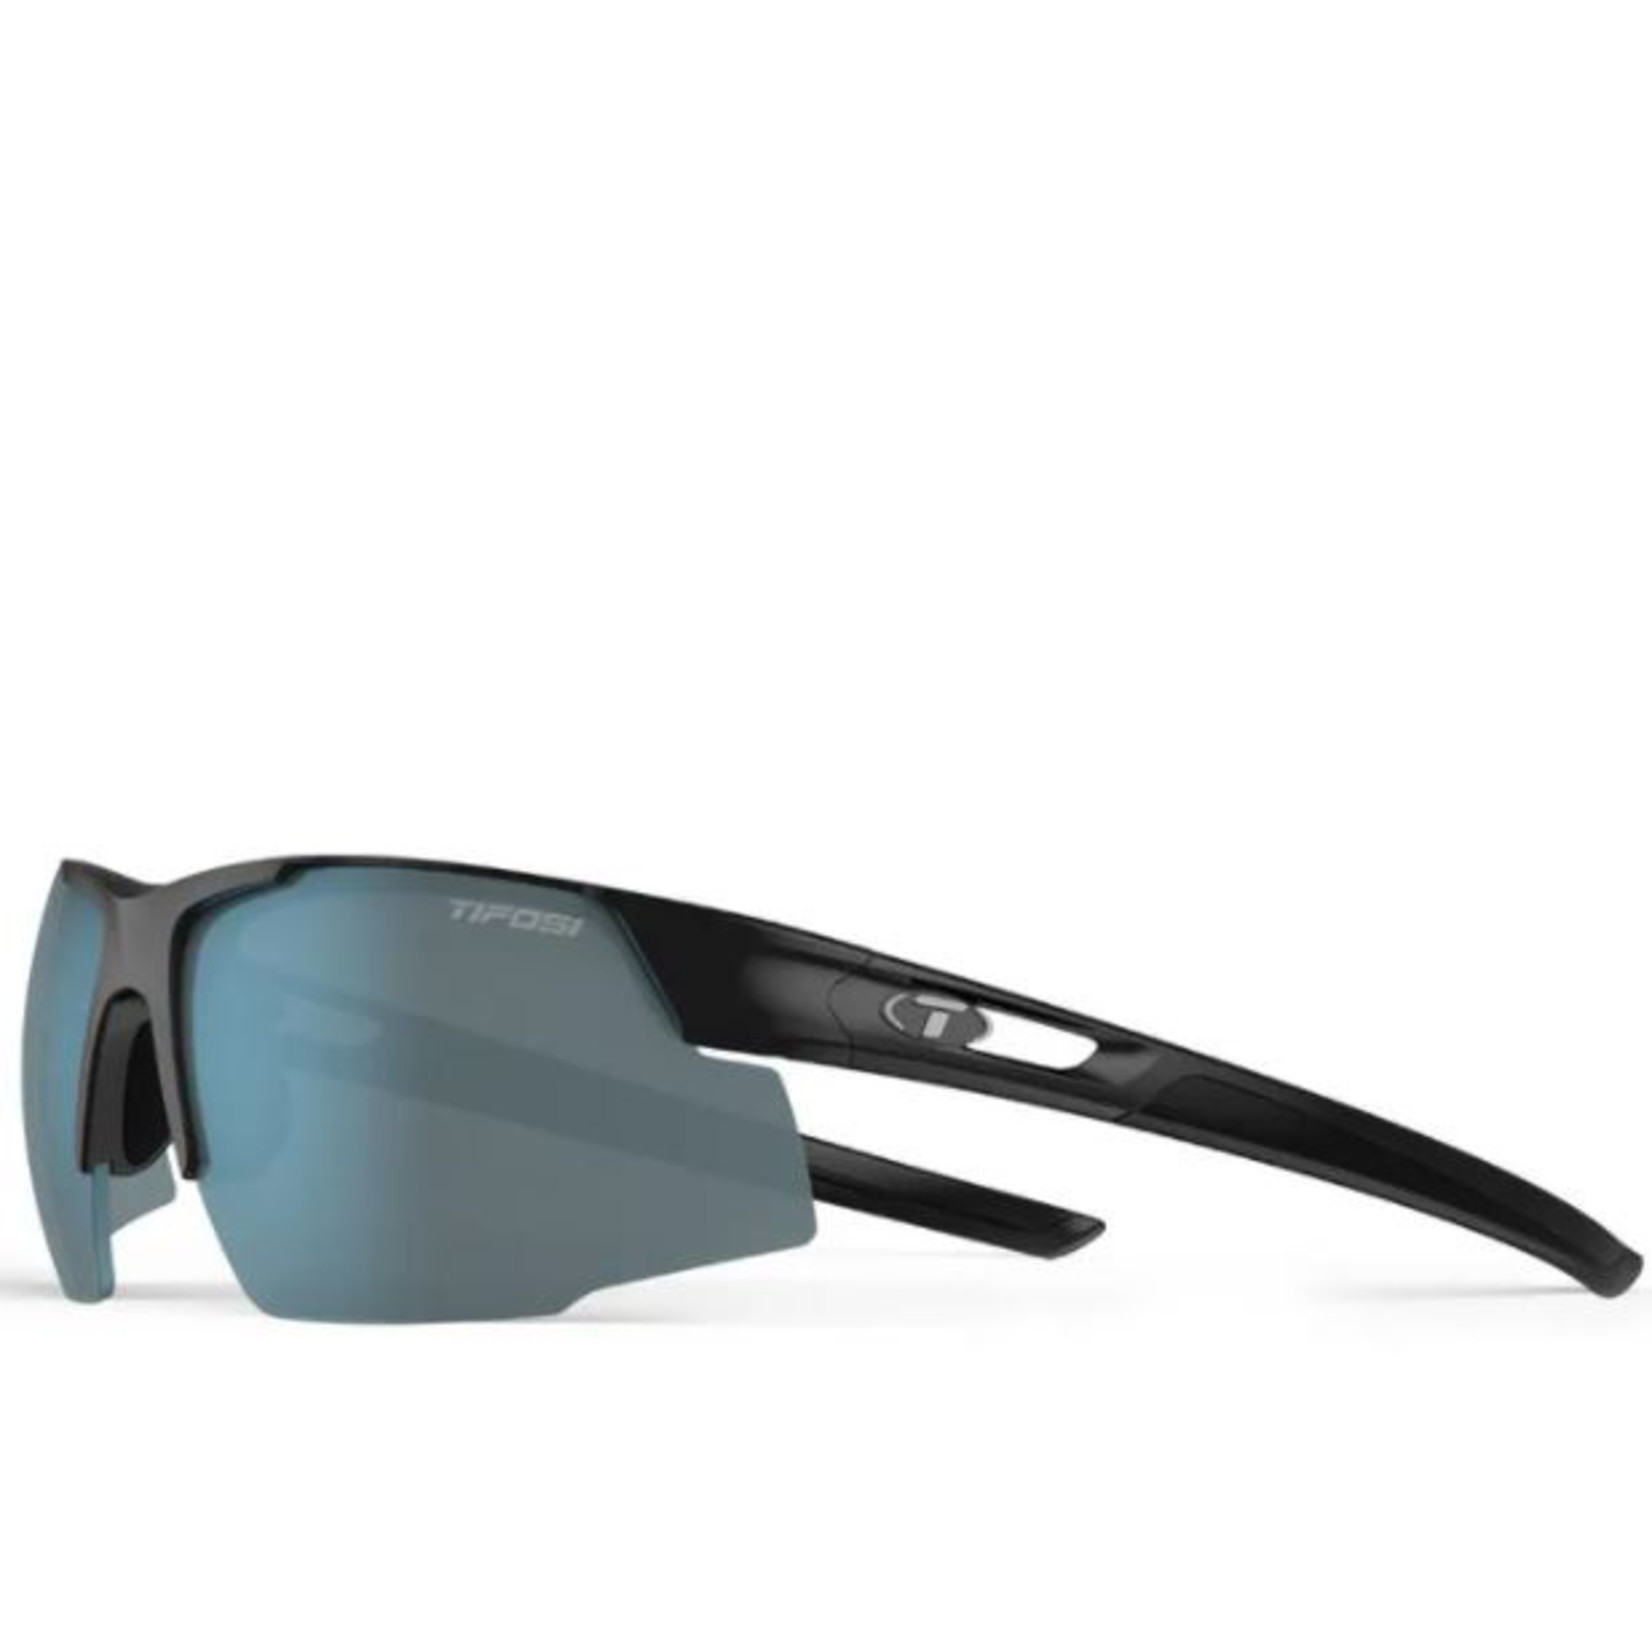 Tifosi Tifosi Cycling Sunglasses - Centus - Gloss Black Shatterproof Polycarbonate